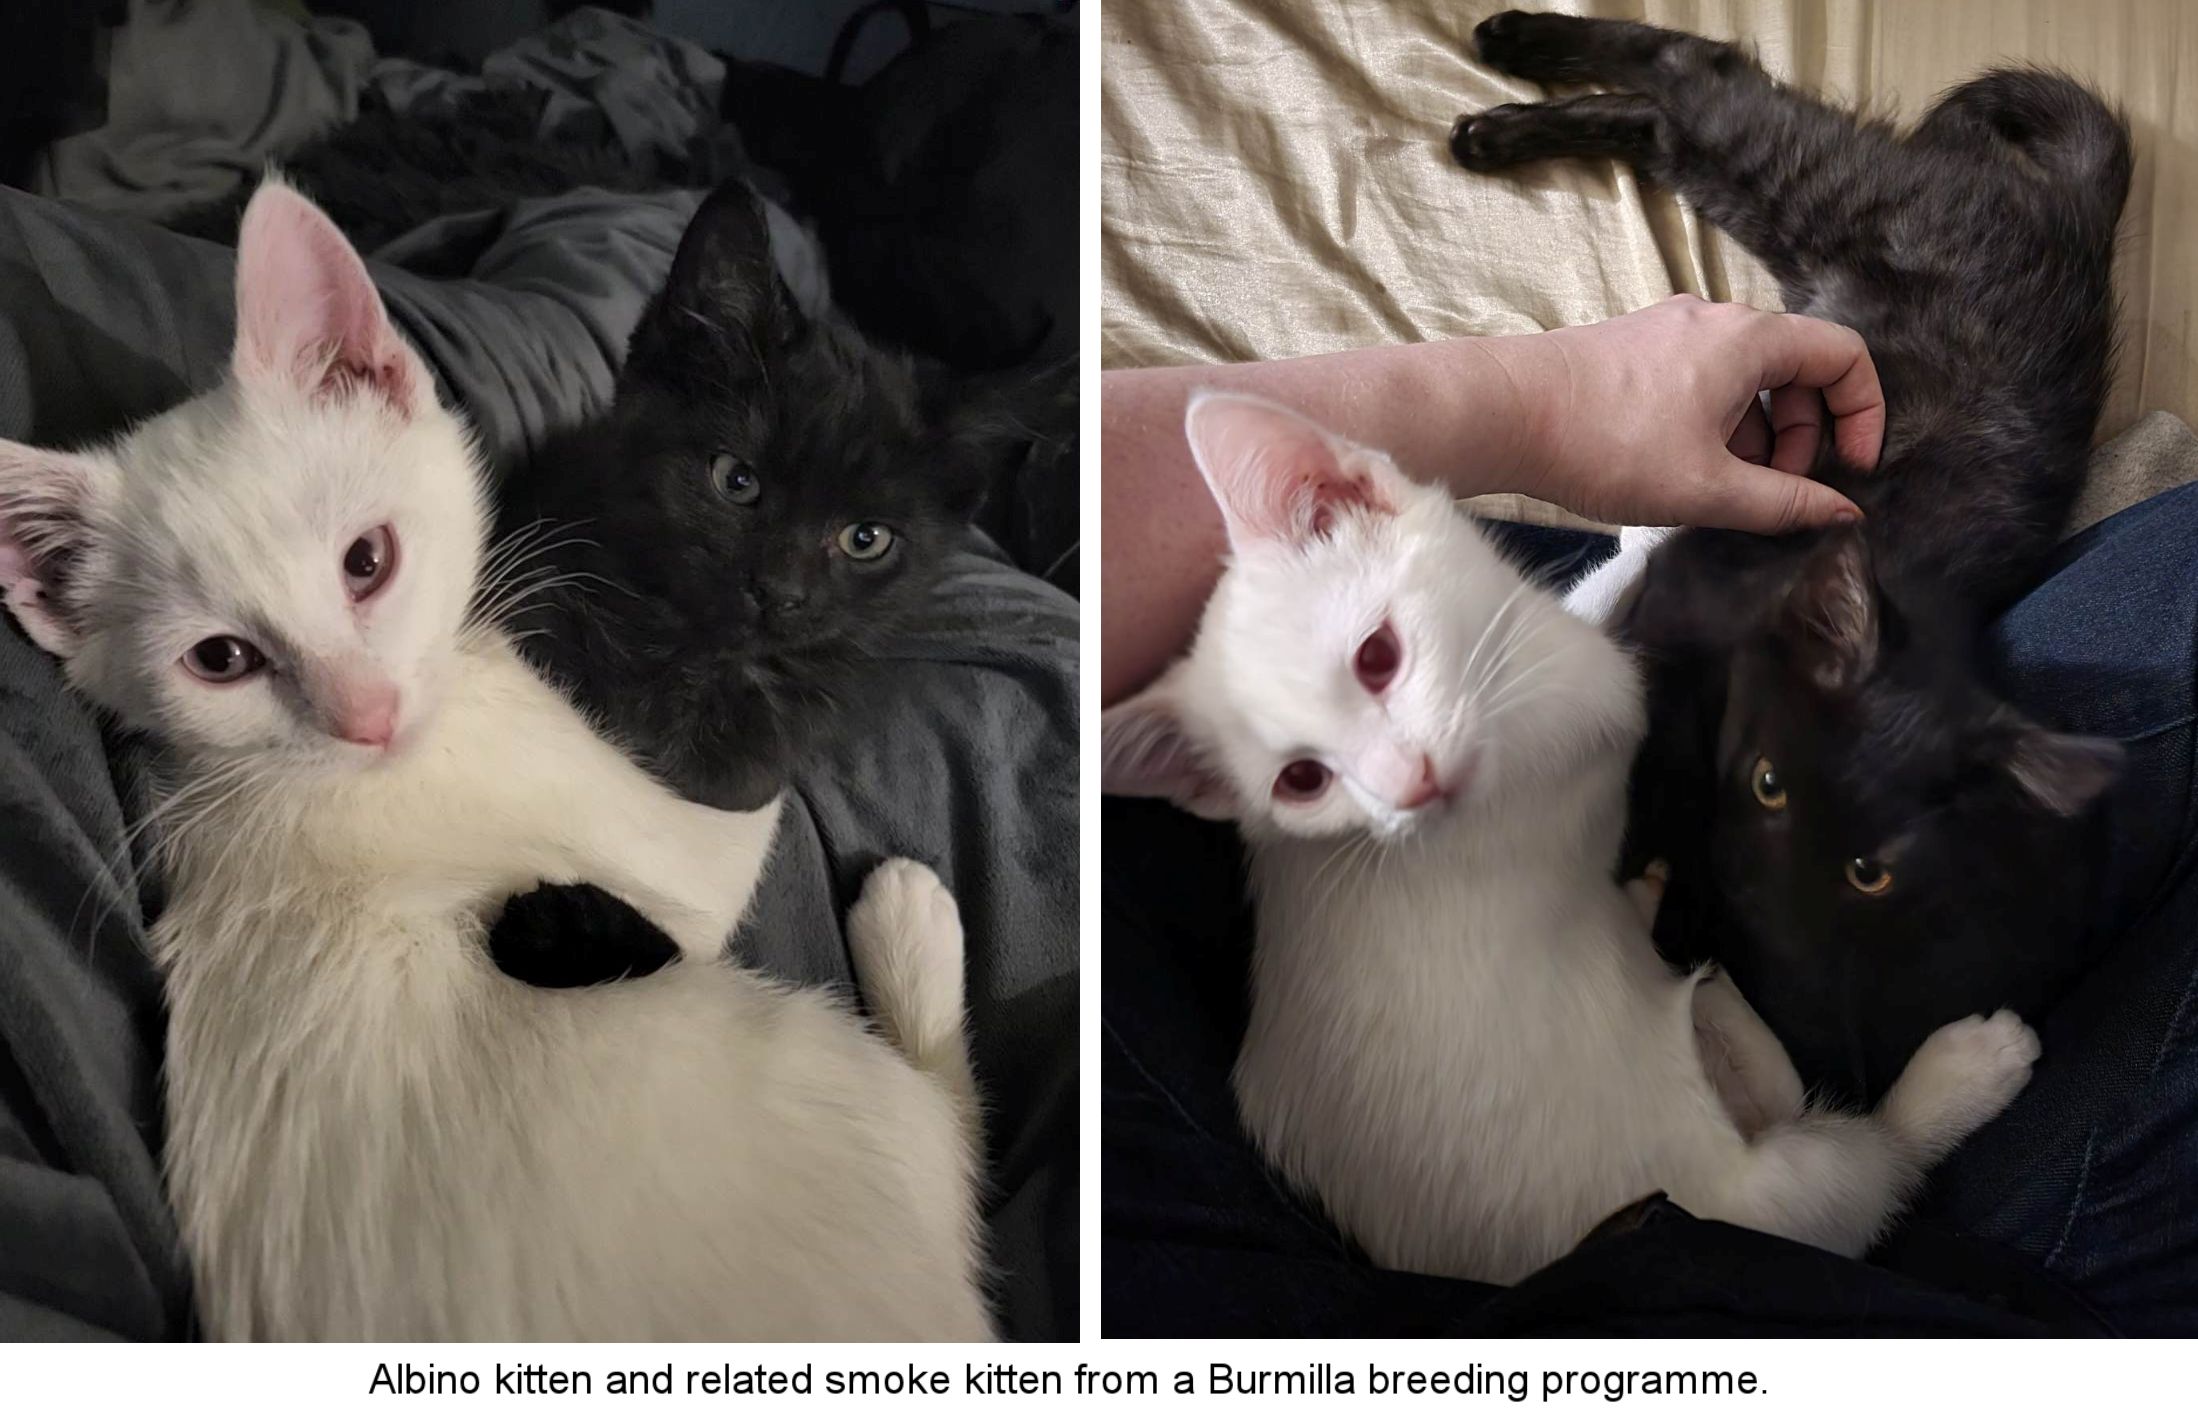 albino and smoke kitten from Burmilla breeding programme